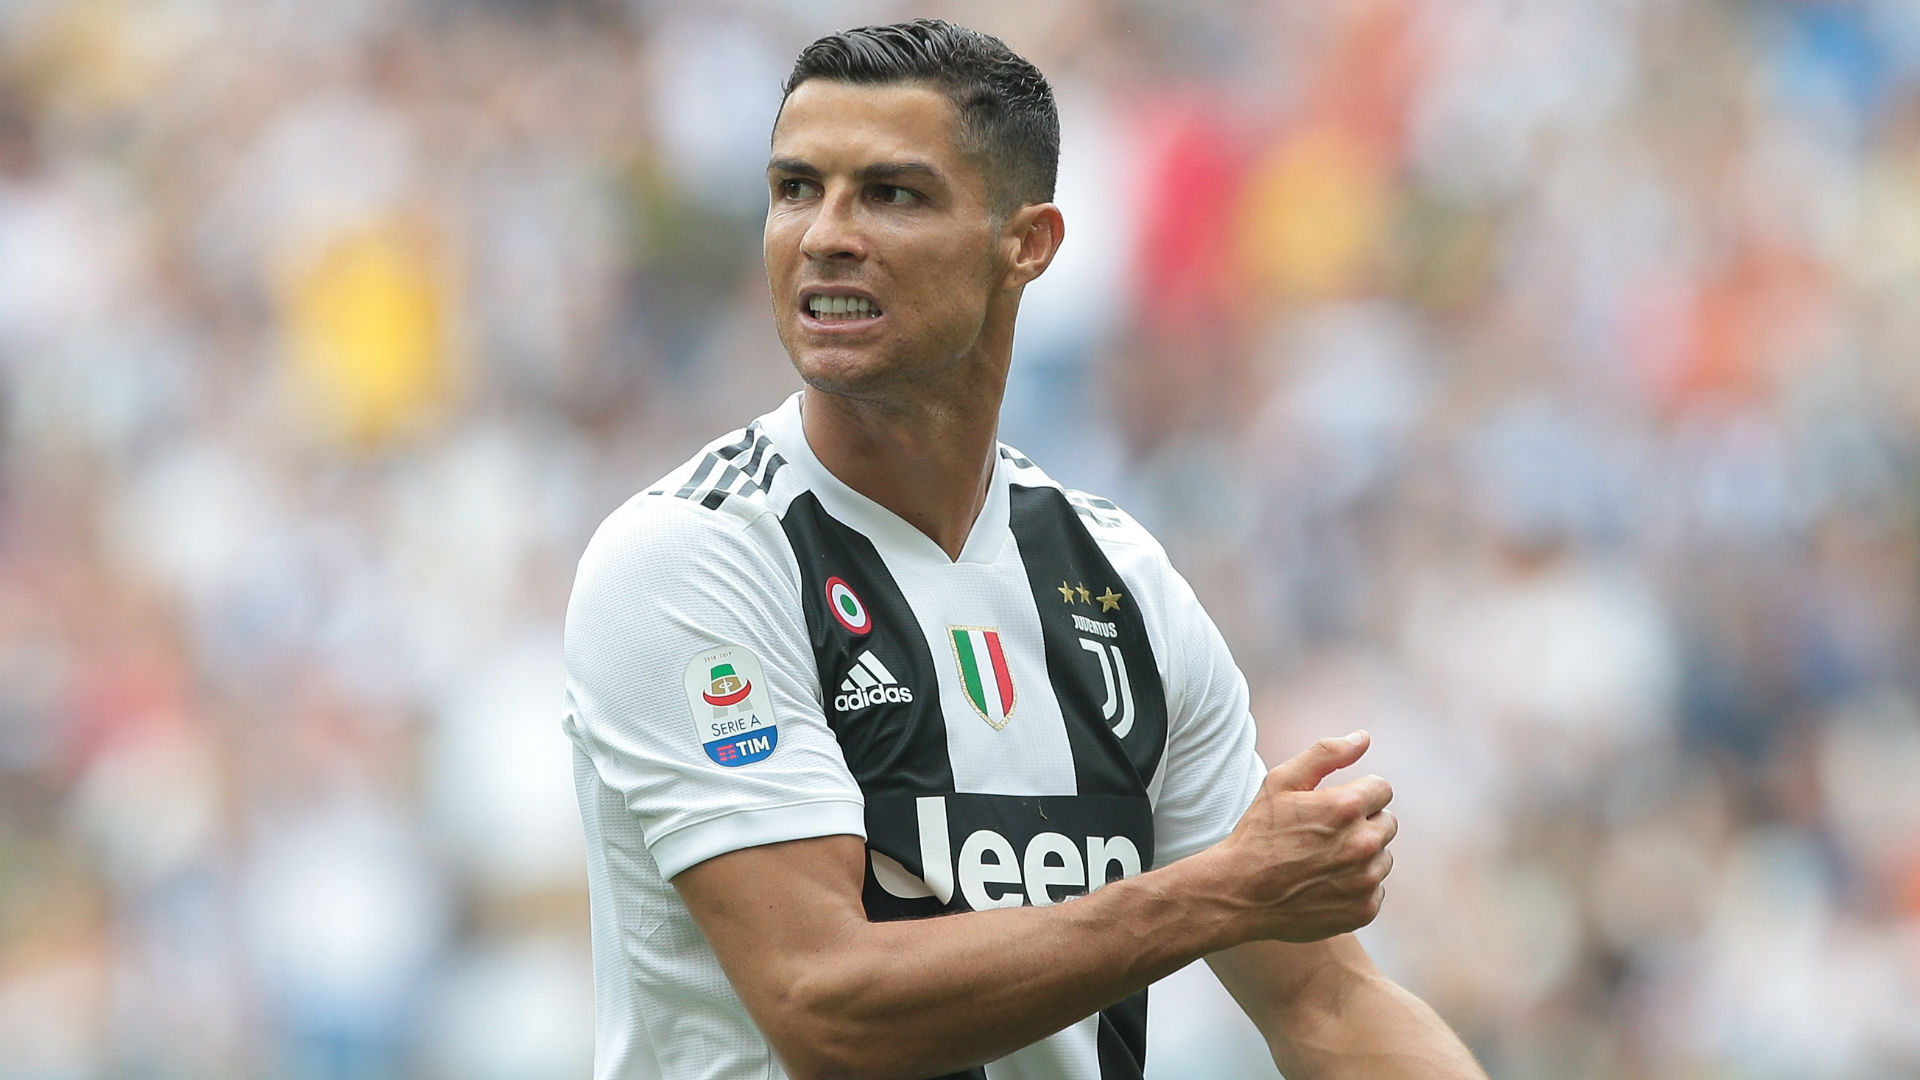 Seyircisiz oynanan maçta Ronaldo ‘taraftarları’ selamladı